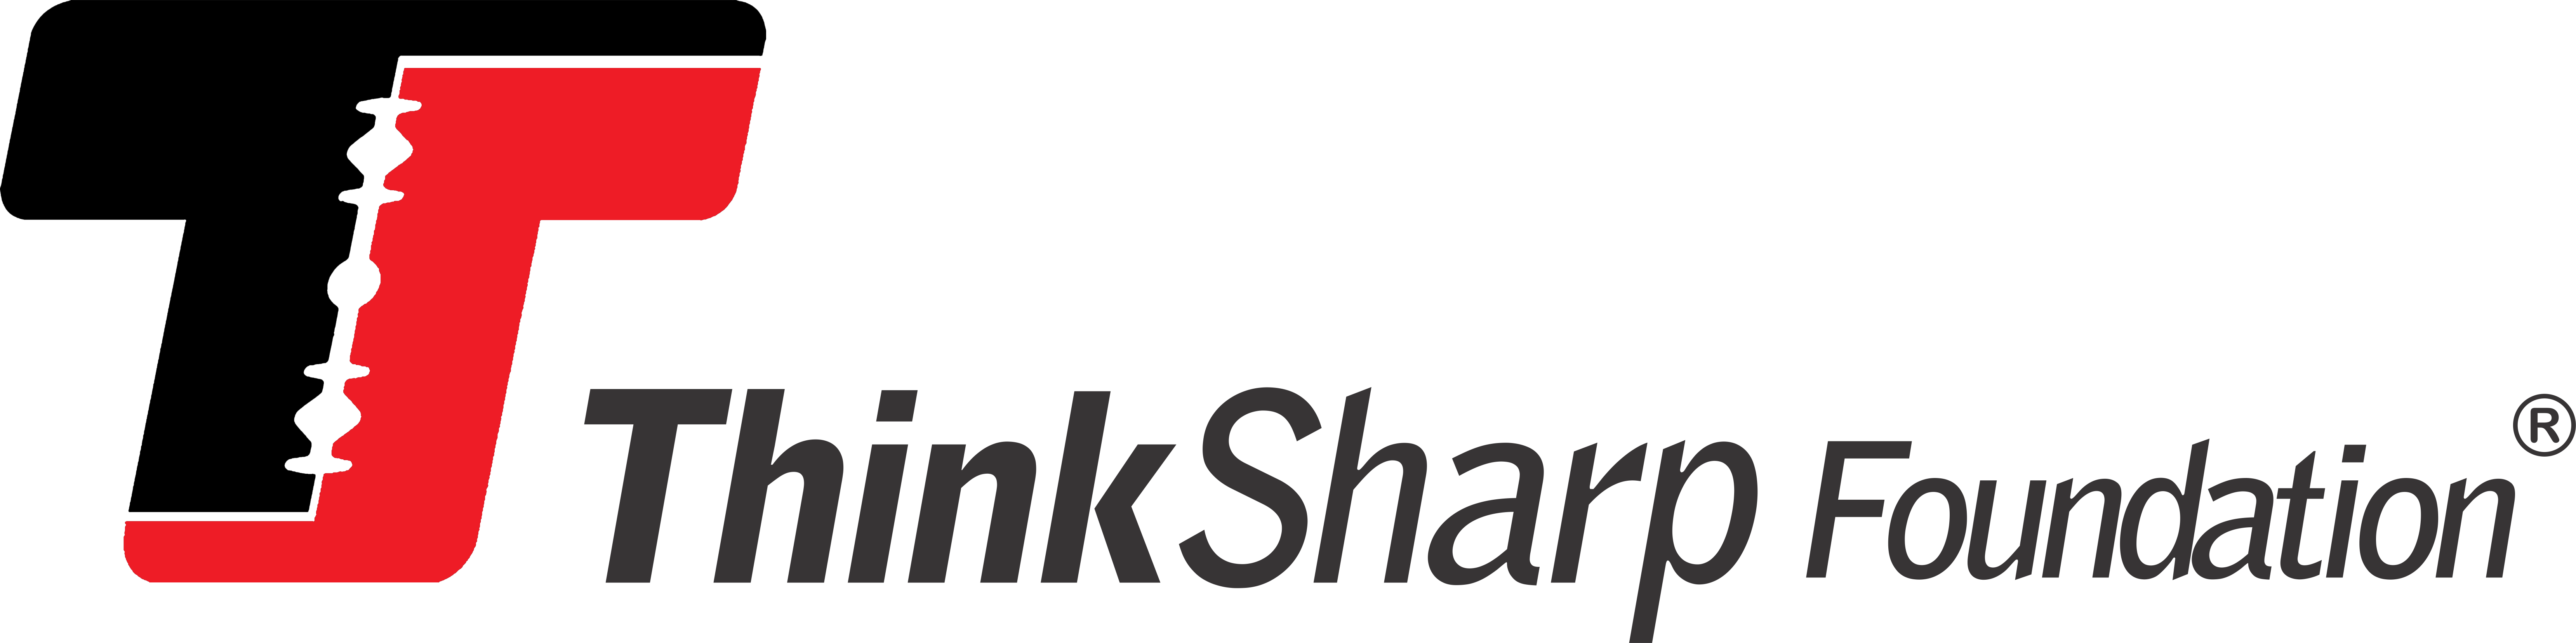 Thinksharp Foundation logo